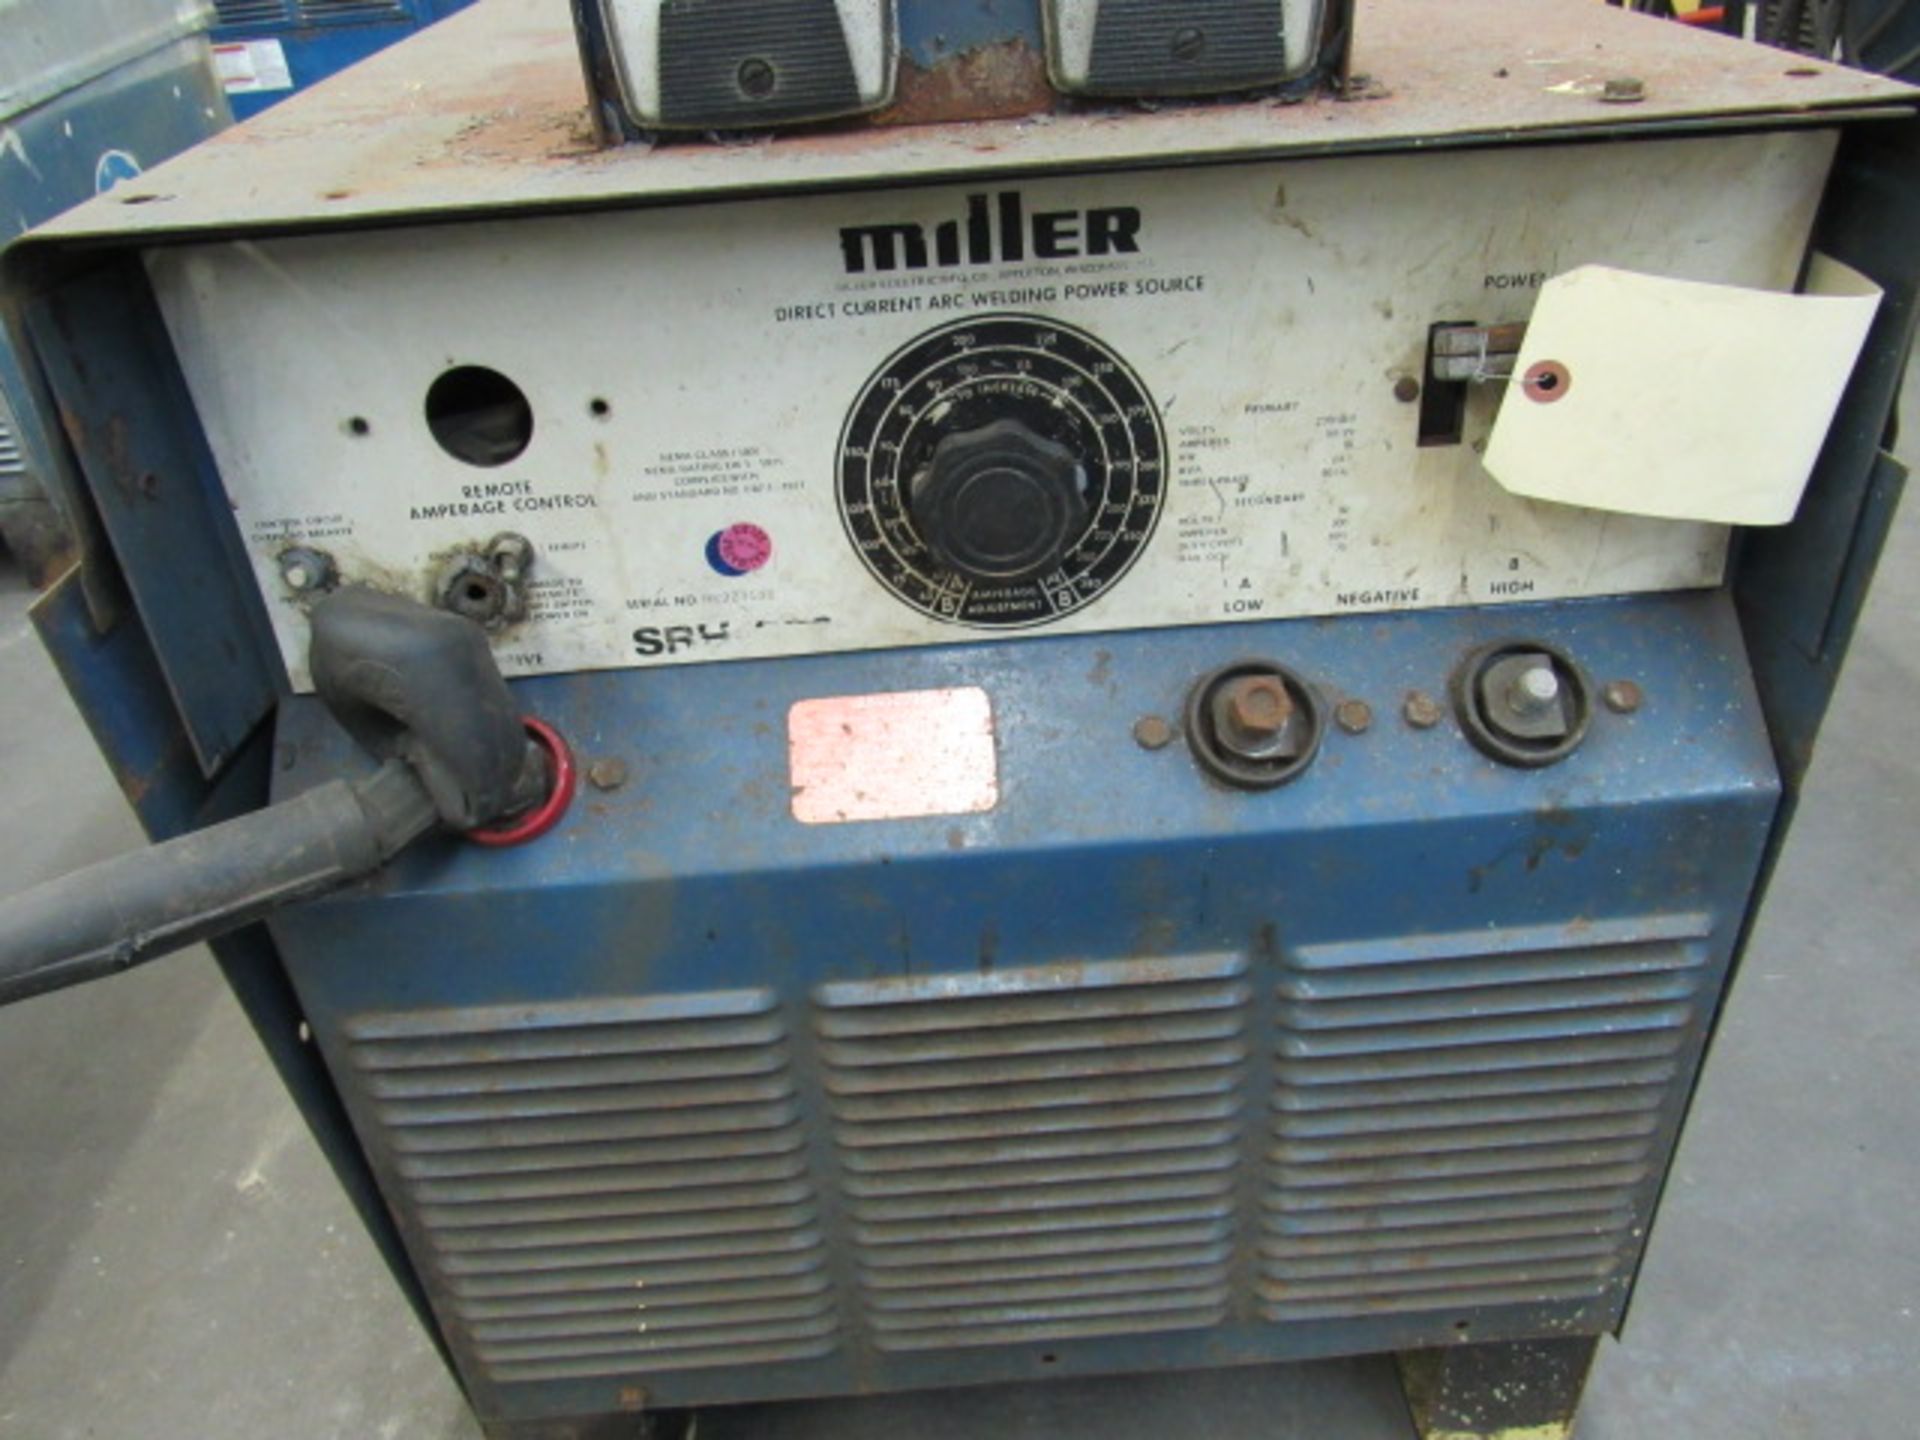 WELDING MACHINE, MILLER MDL. SRH-333, 230/460 v., 3 phase, 60 Hz, 15 kW, S/N HK323132 - Image 2 of 2